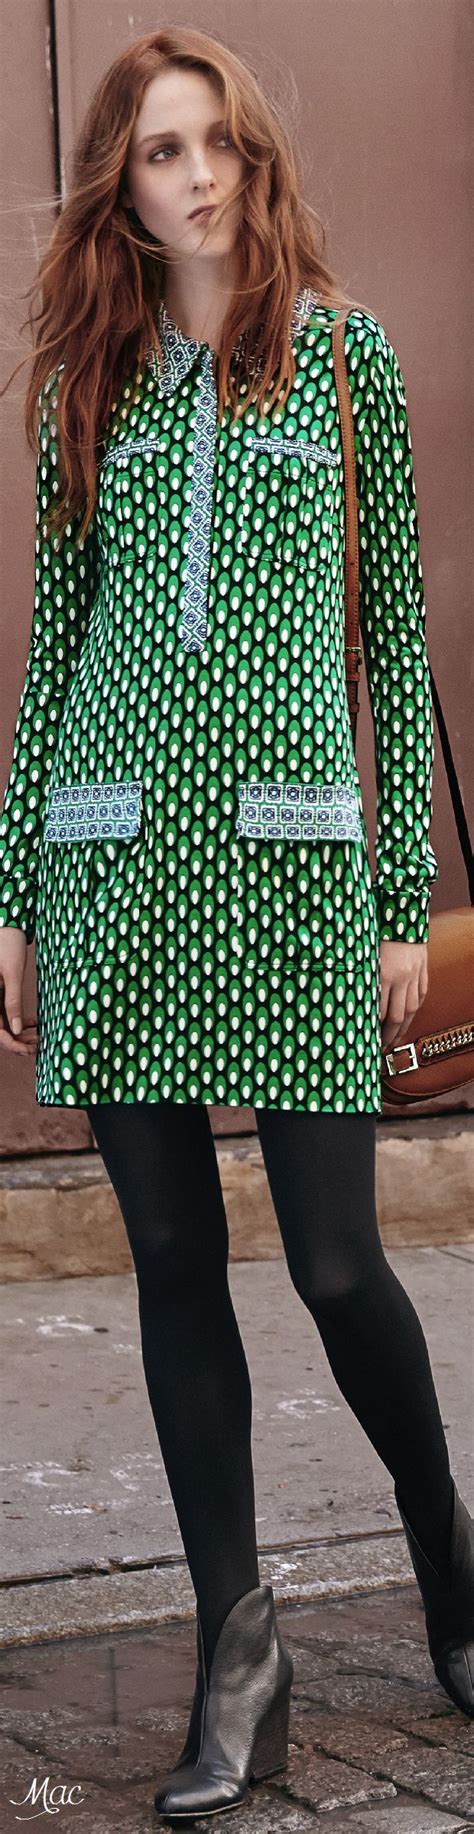 diane von furstenberg pre fall 2016 chelsea collar fashion 2017 fashion outfits street chic